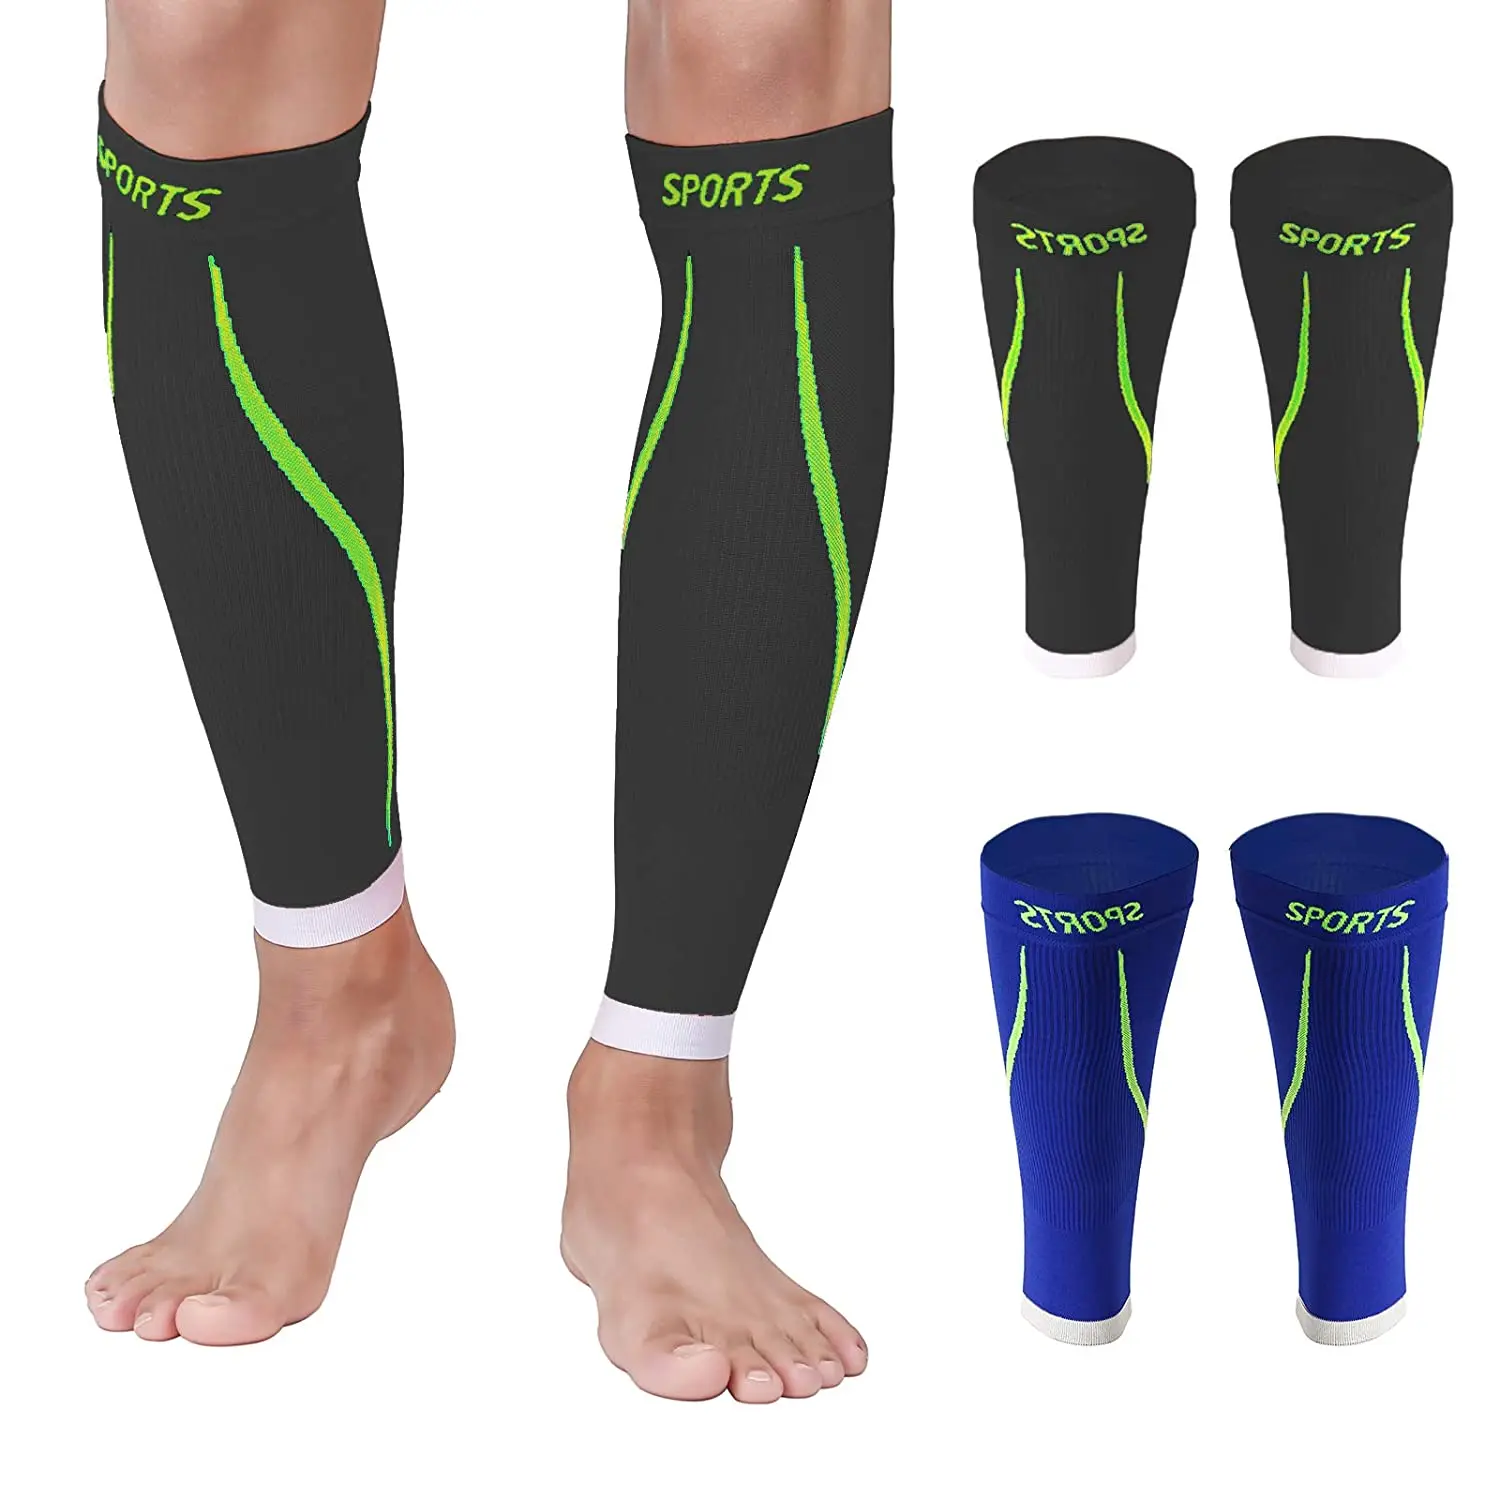 

men Sock for Shin Support Relief Leg Vein Breathable Brace Medical 15-20mmHg Calf graduated Compression Sleeve Sports Socks